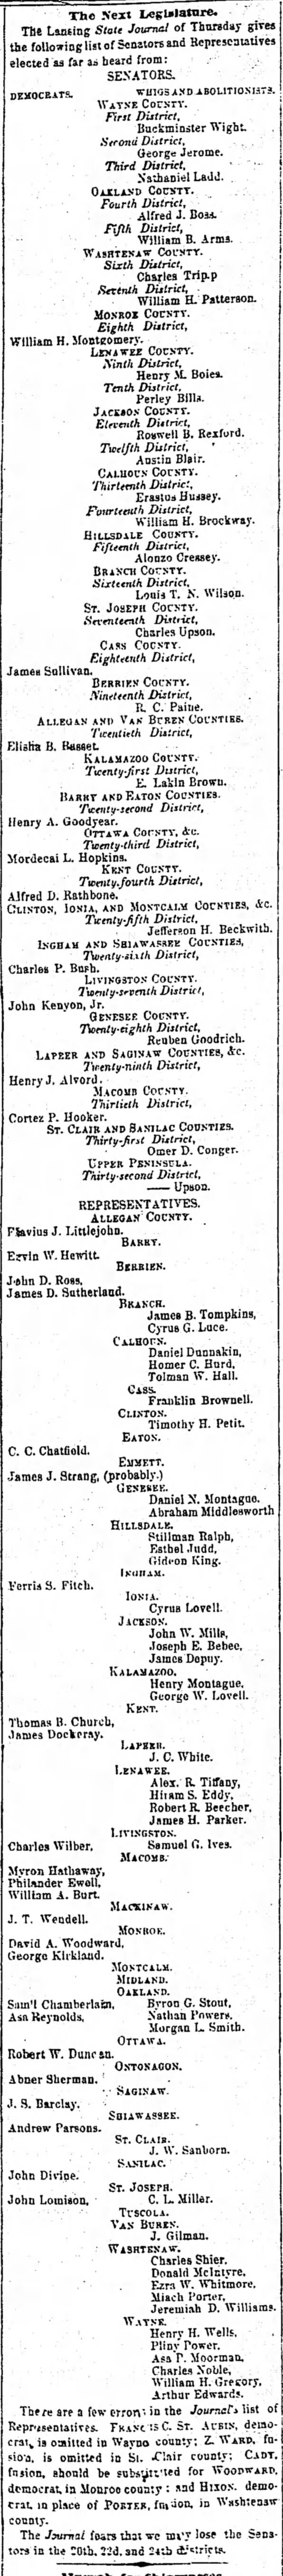 1854 Nov election results